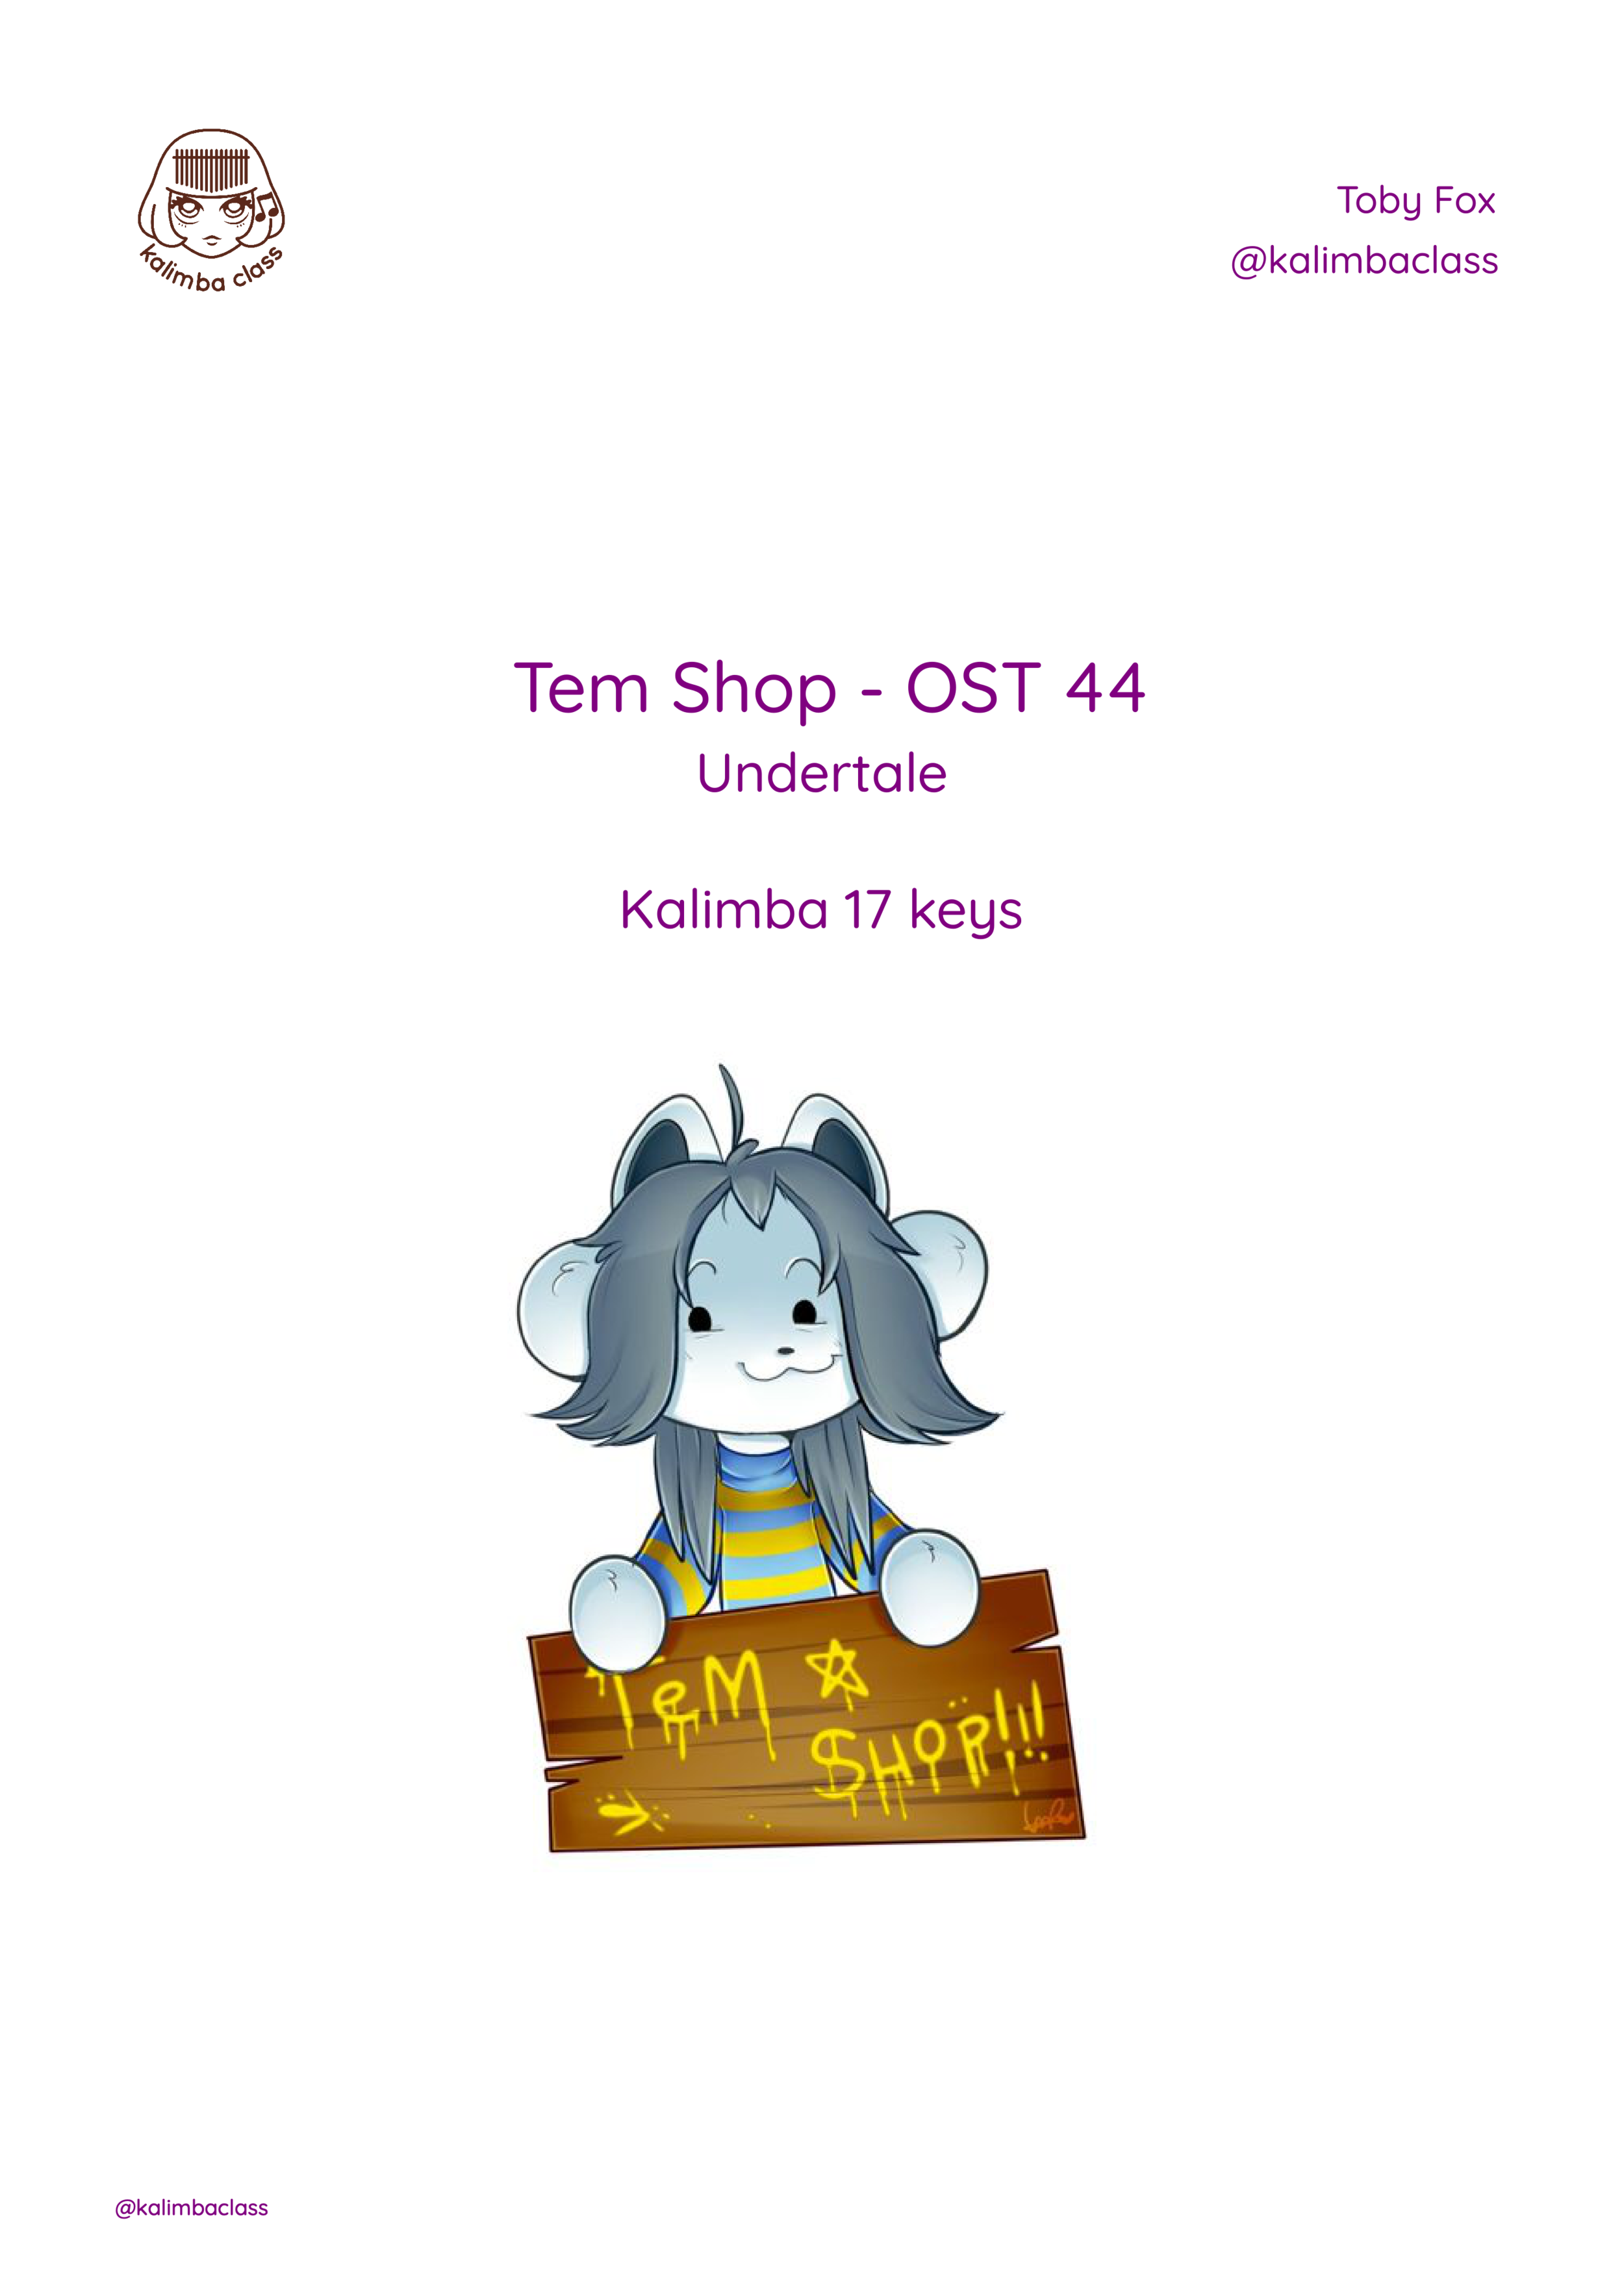 Tem Shop - OST 44 undertale kalimba-1.png